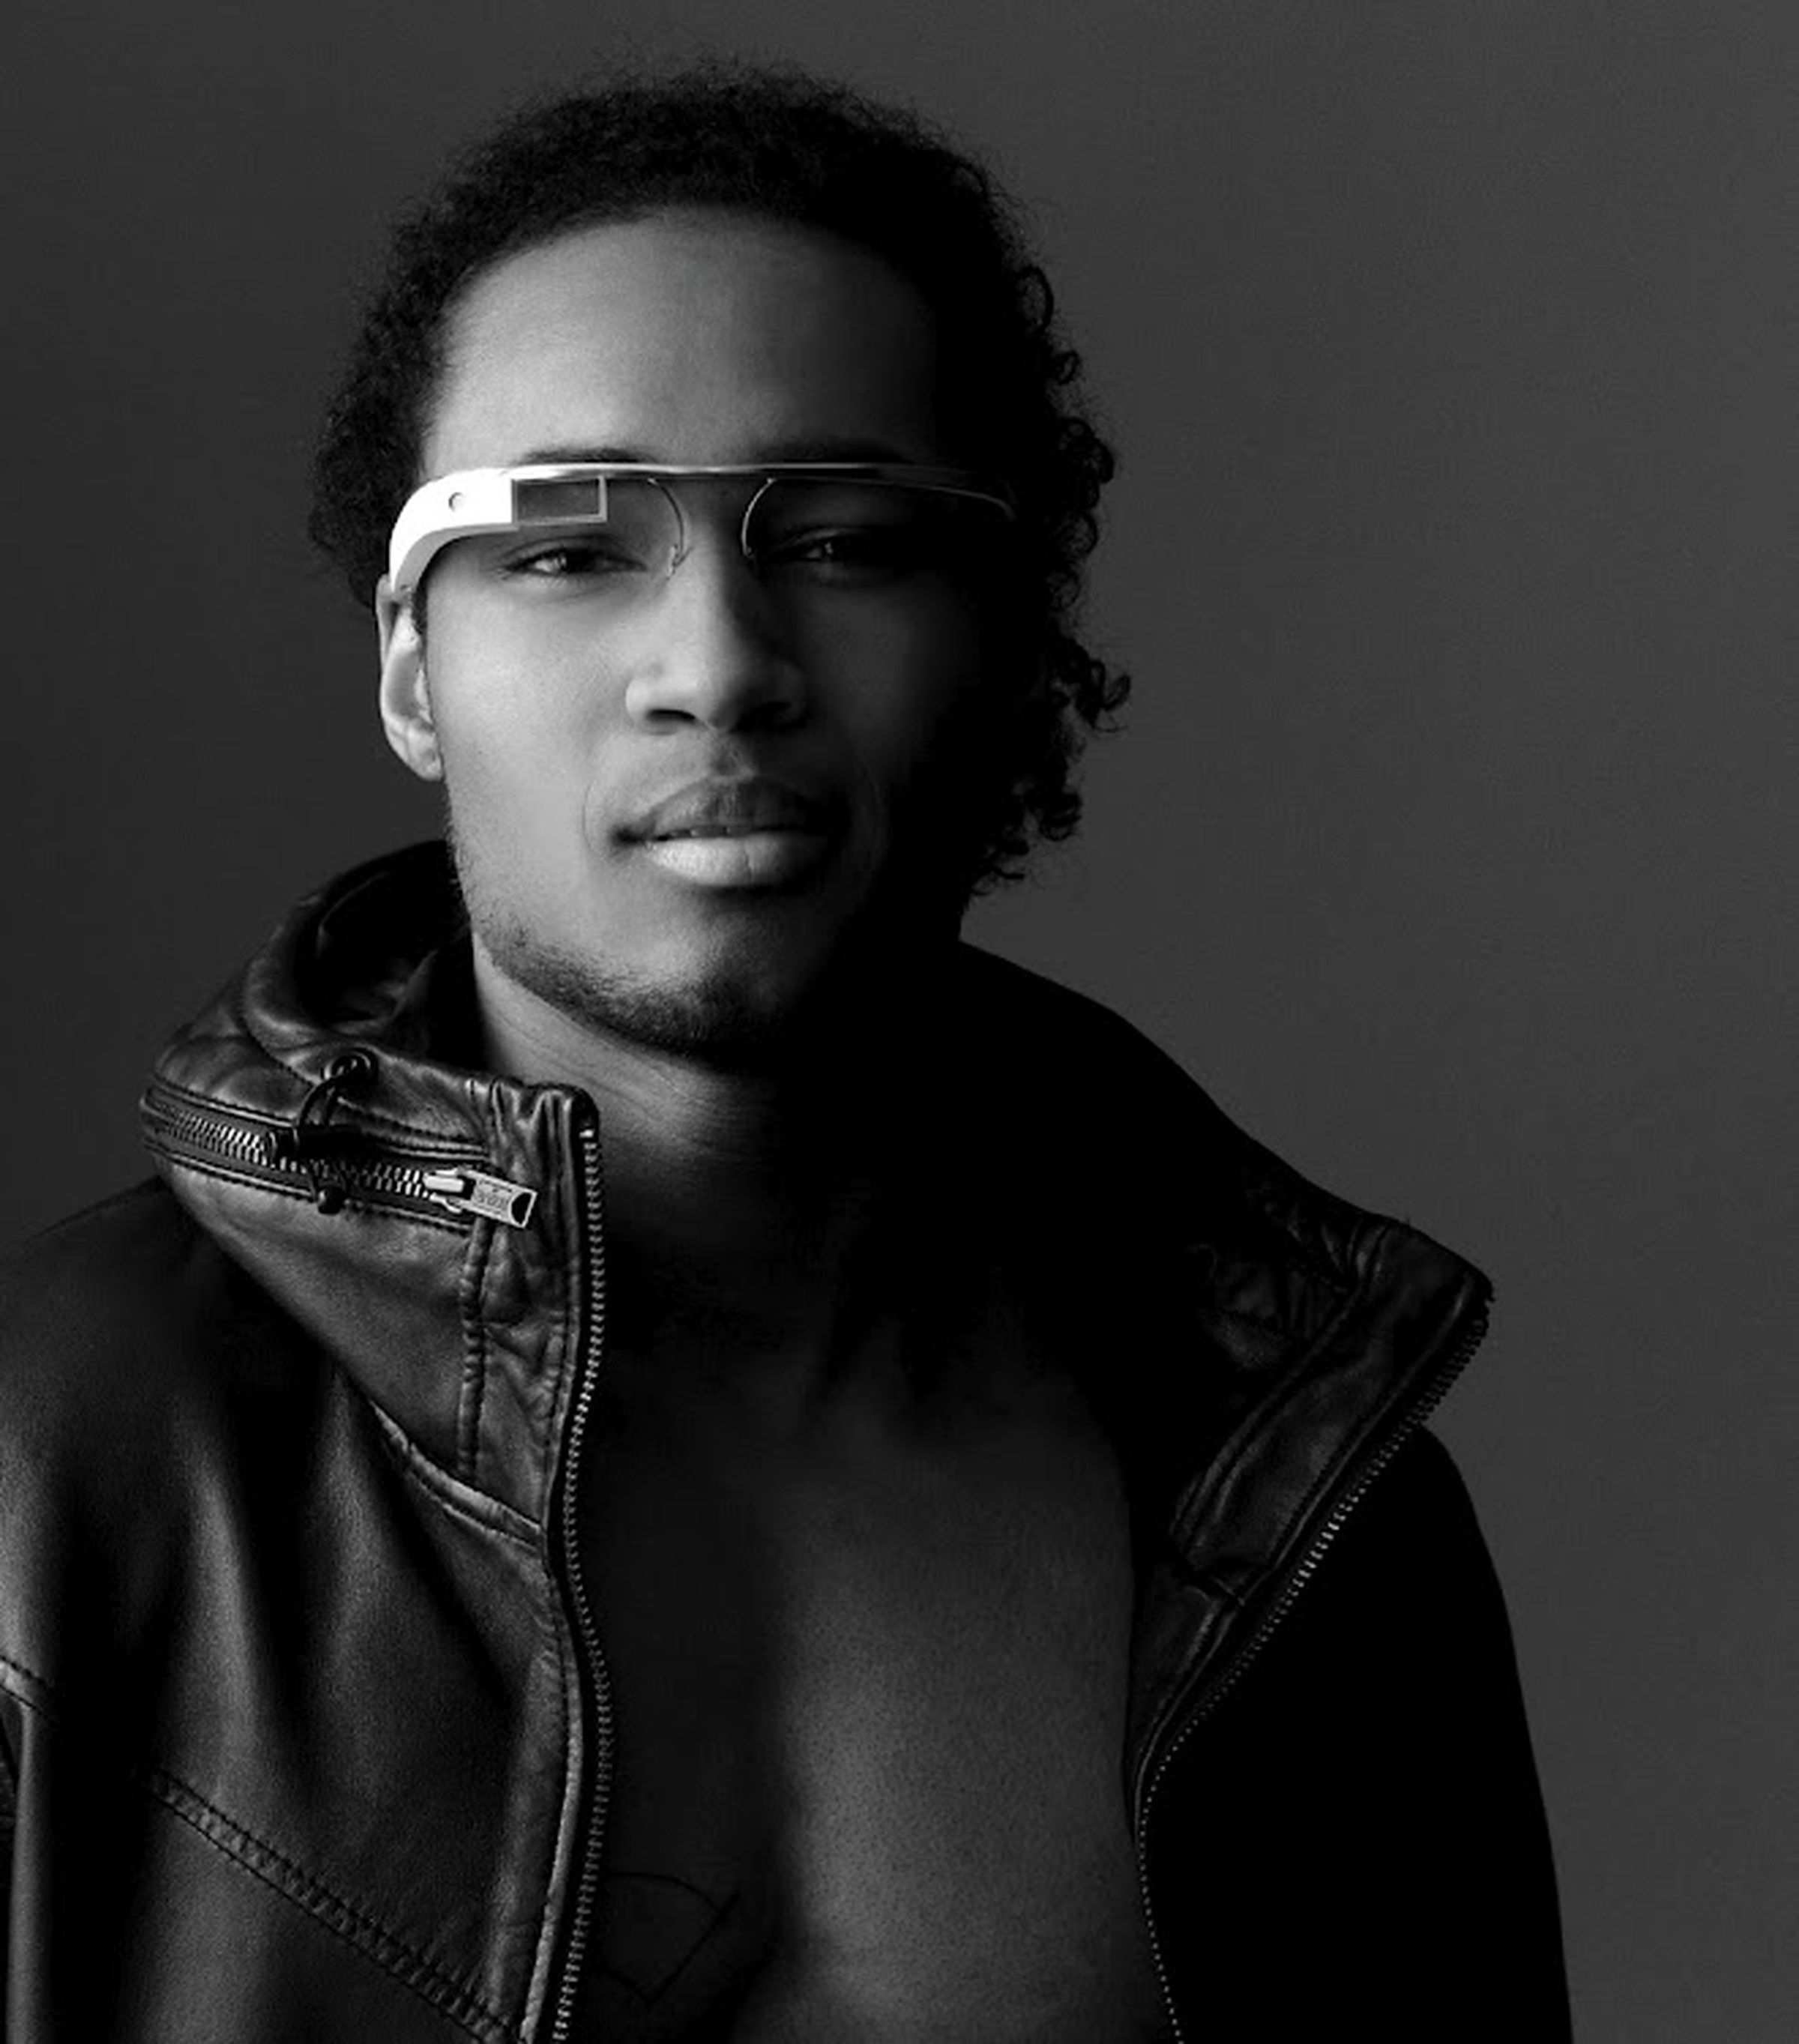 Google Project Glass press photos